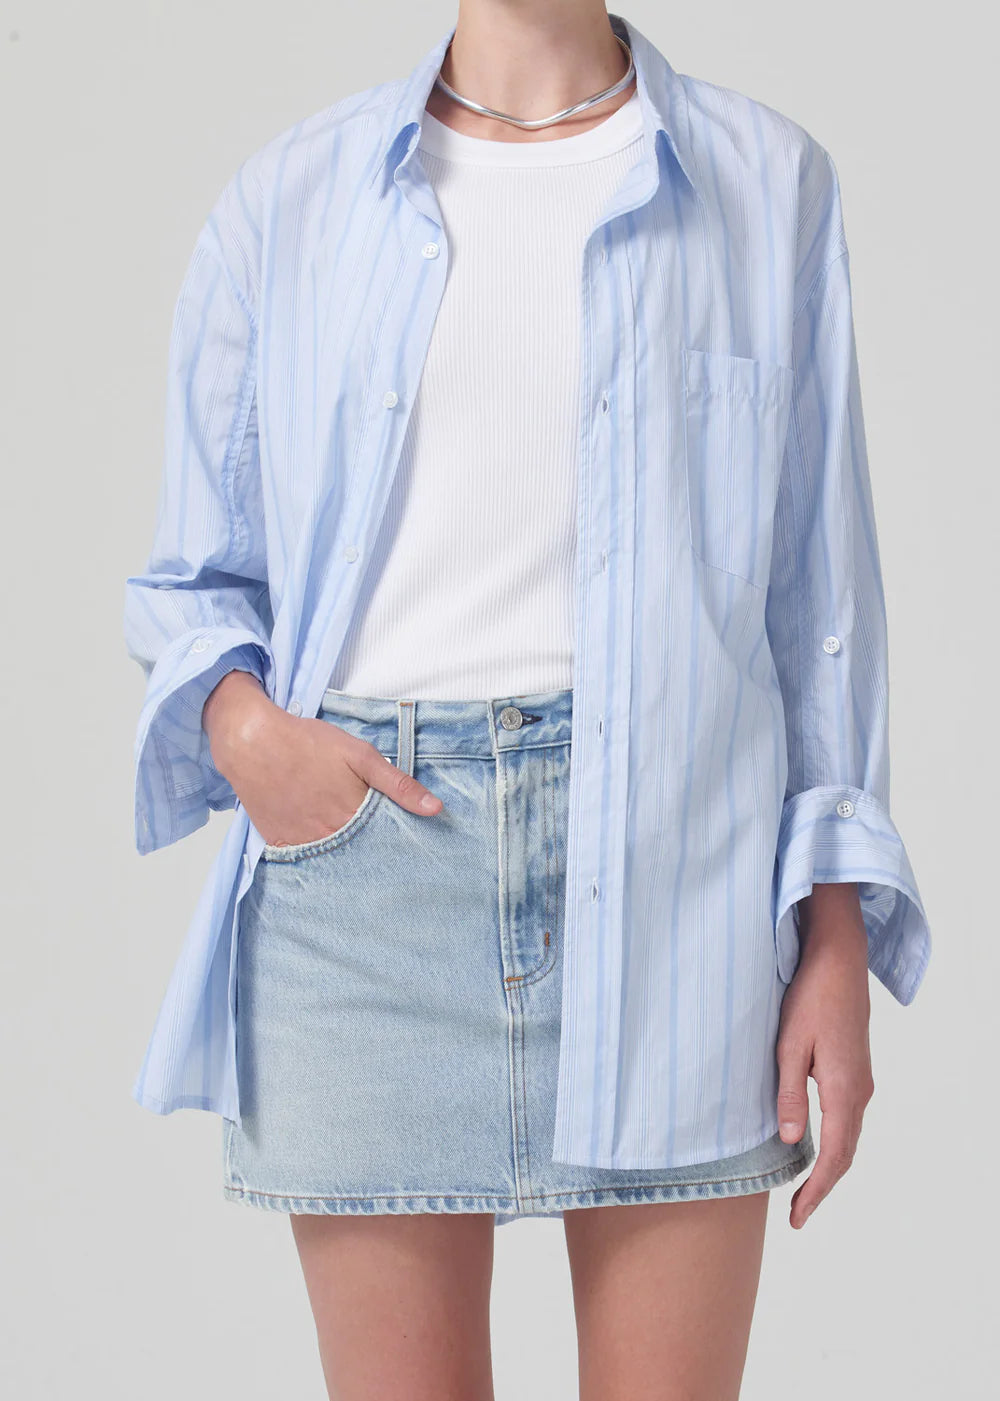 Citizen of Humanity Kayla Shirt, button down shirt, blouse, women's clothing